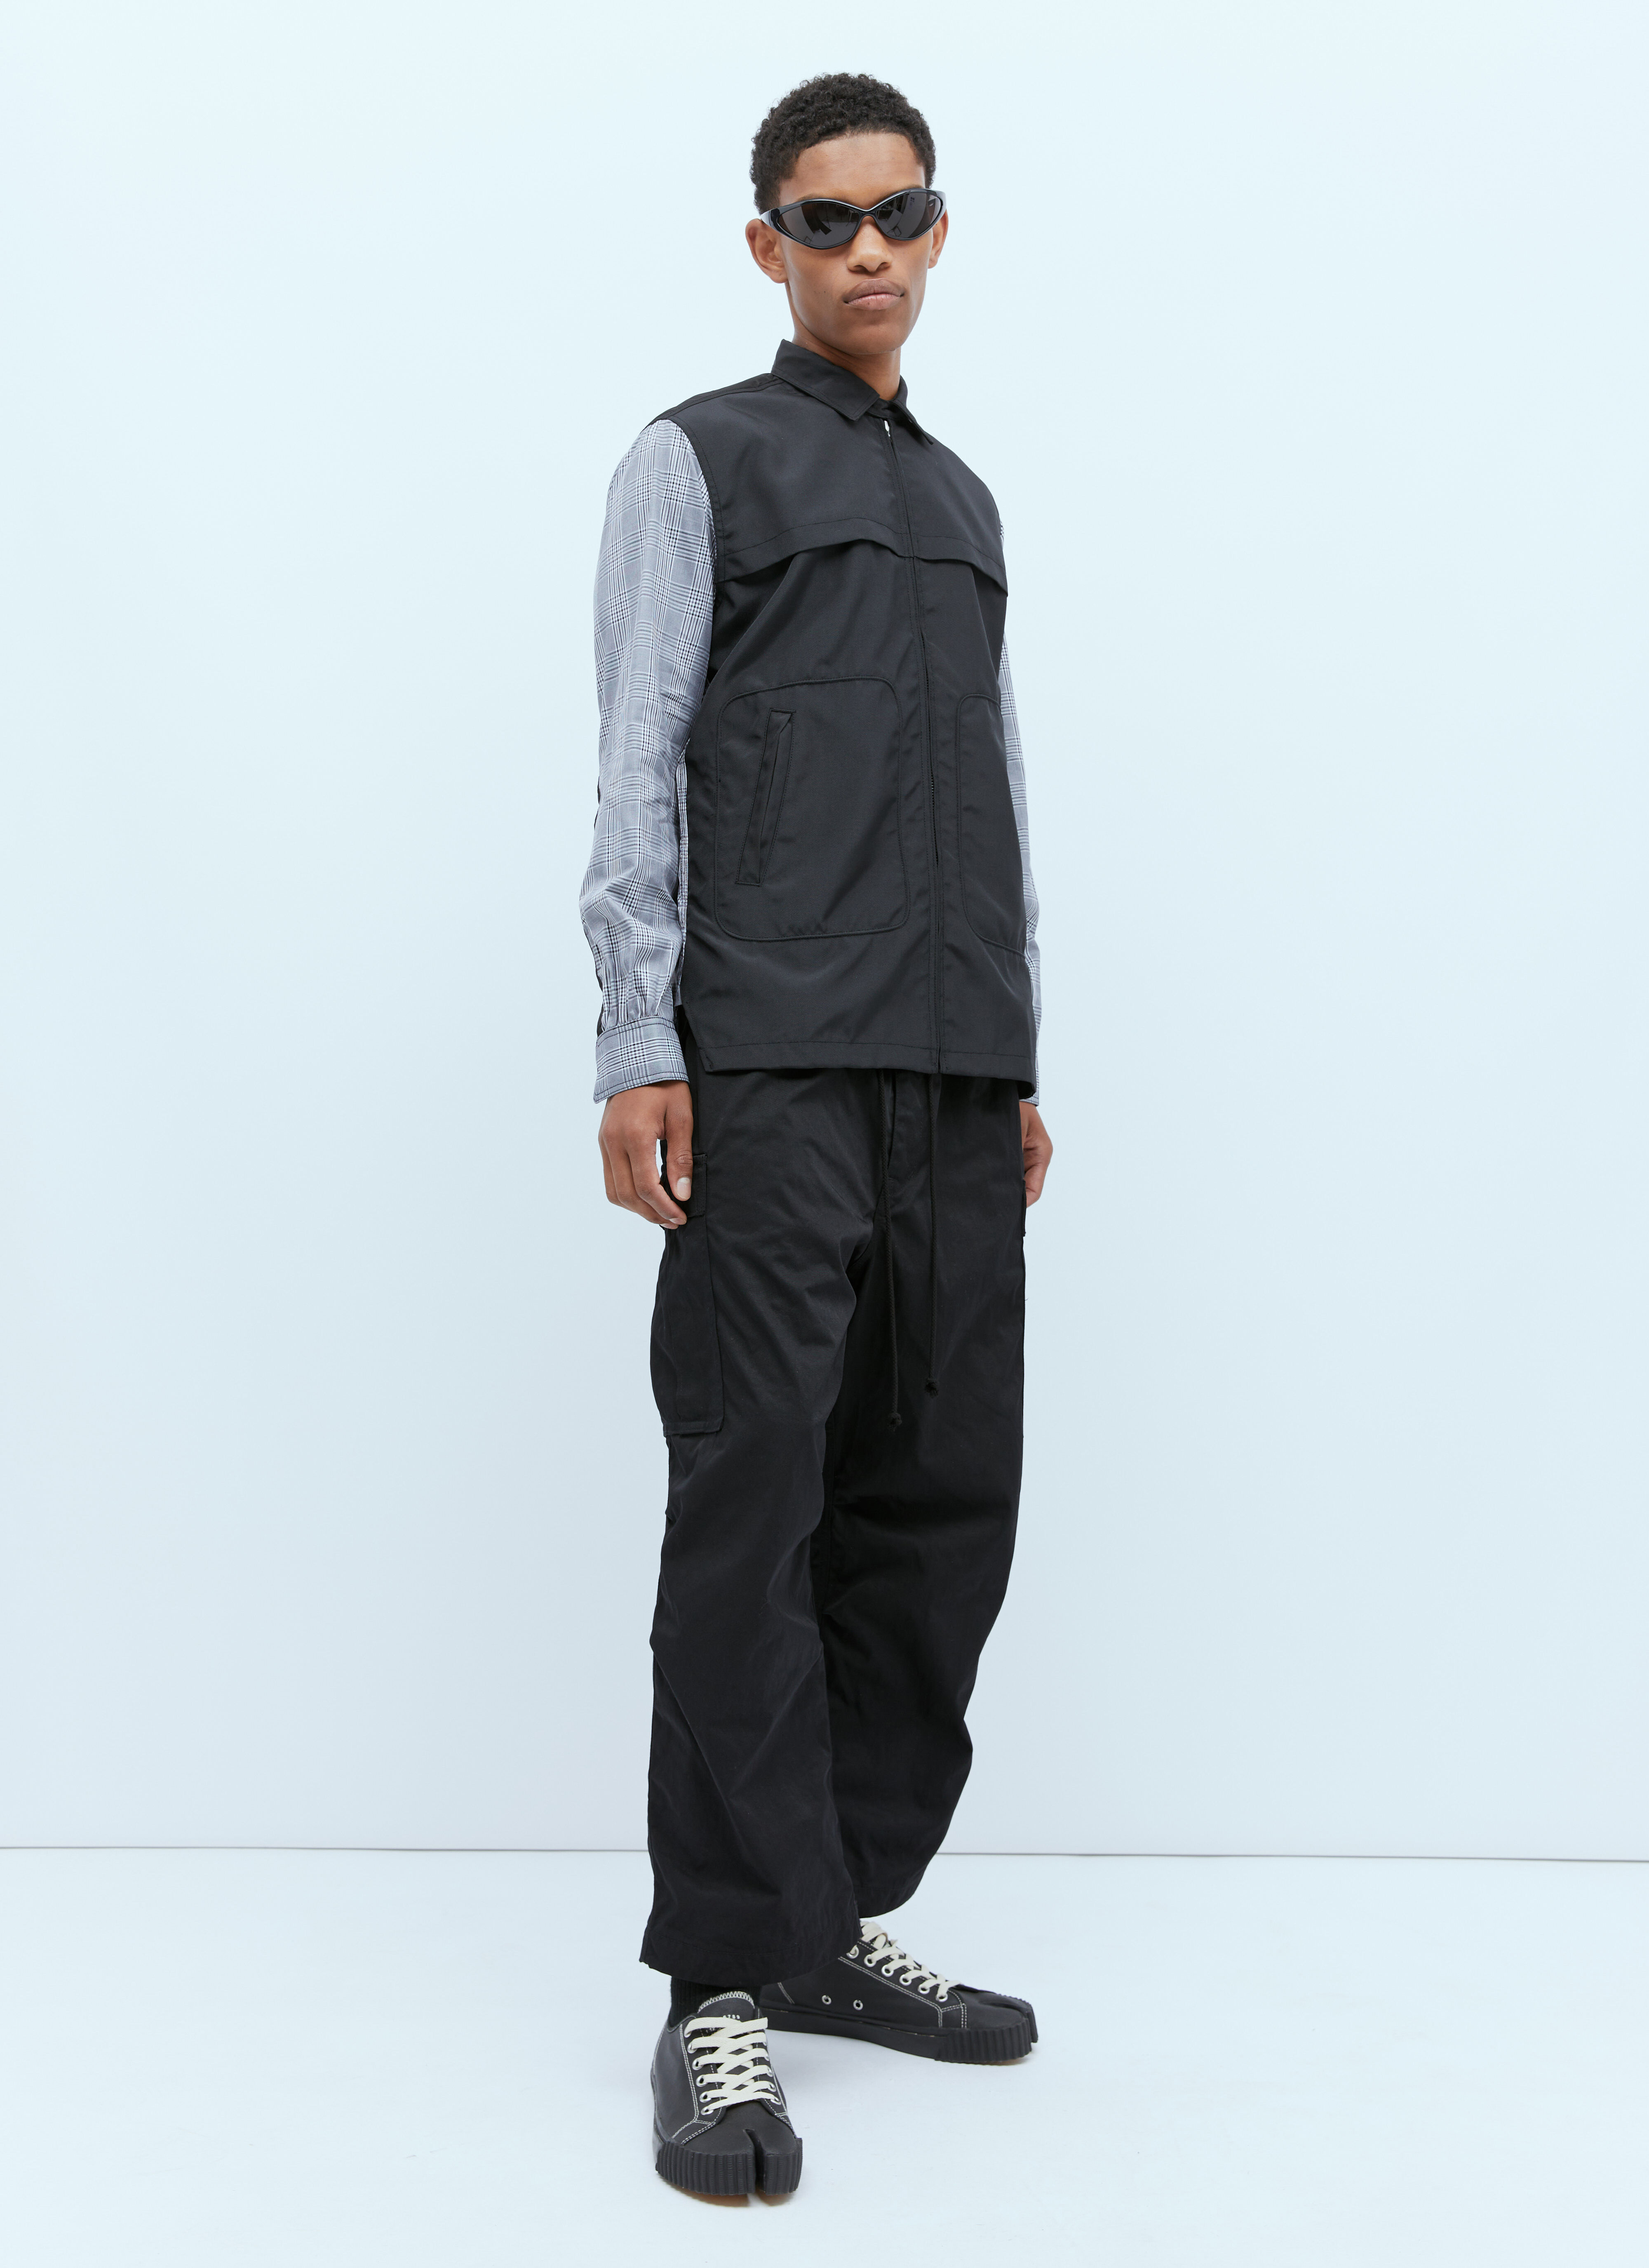 Junya Watanabe x Oakley Technical Cargo Pants Black jwo0154001